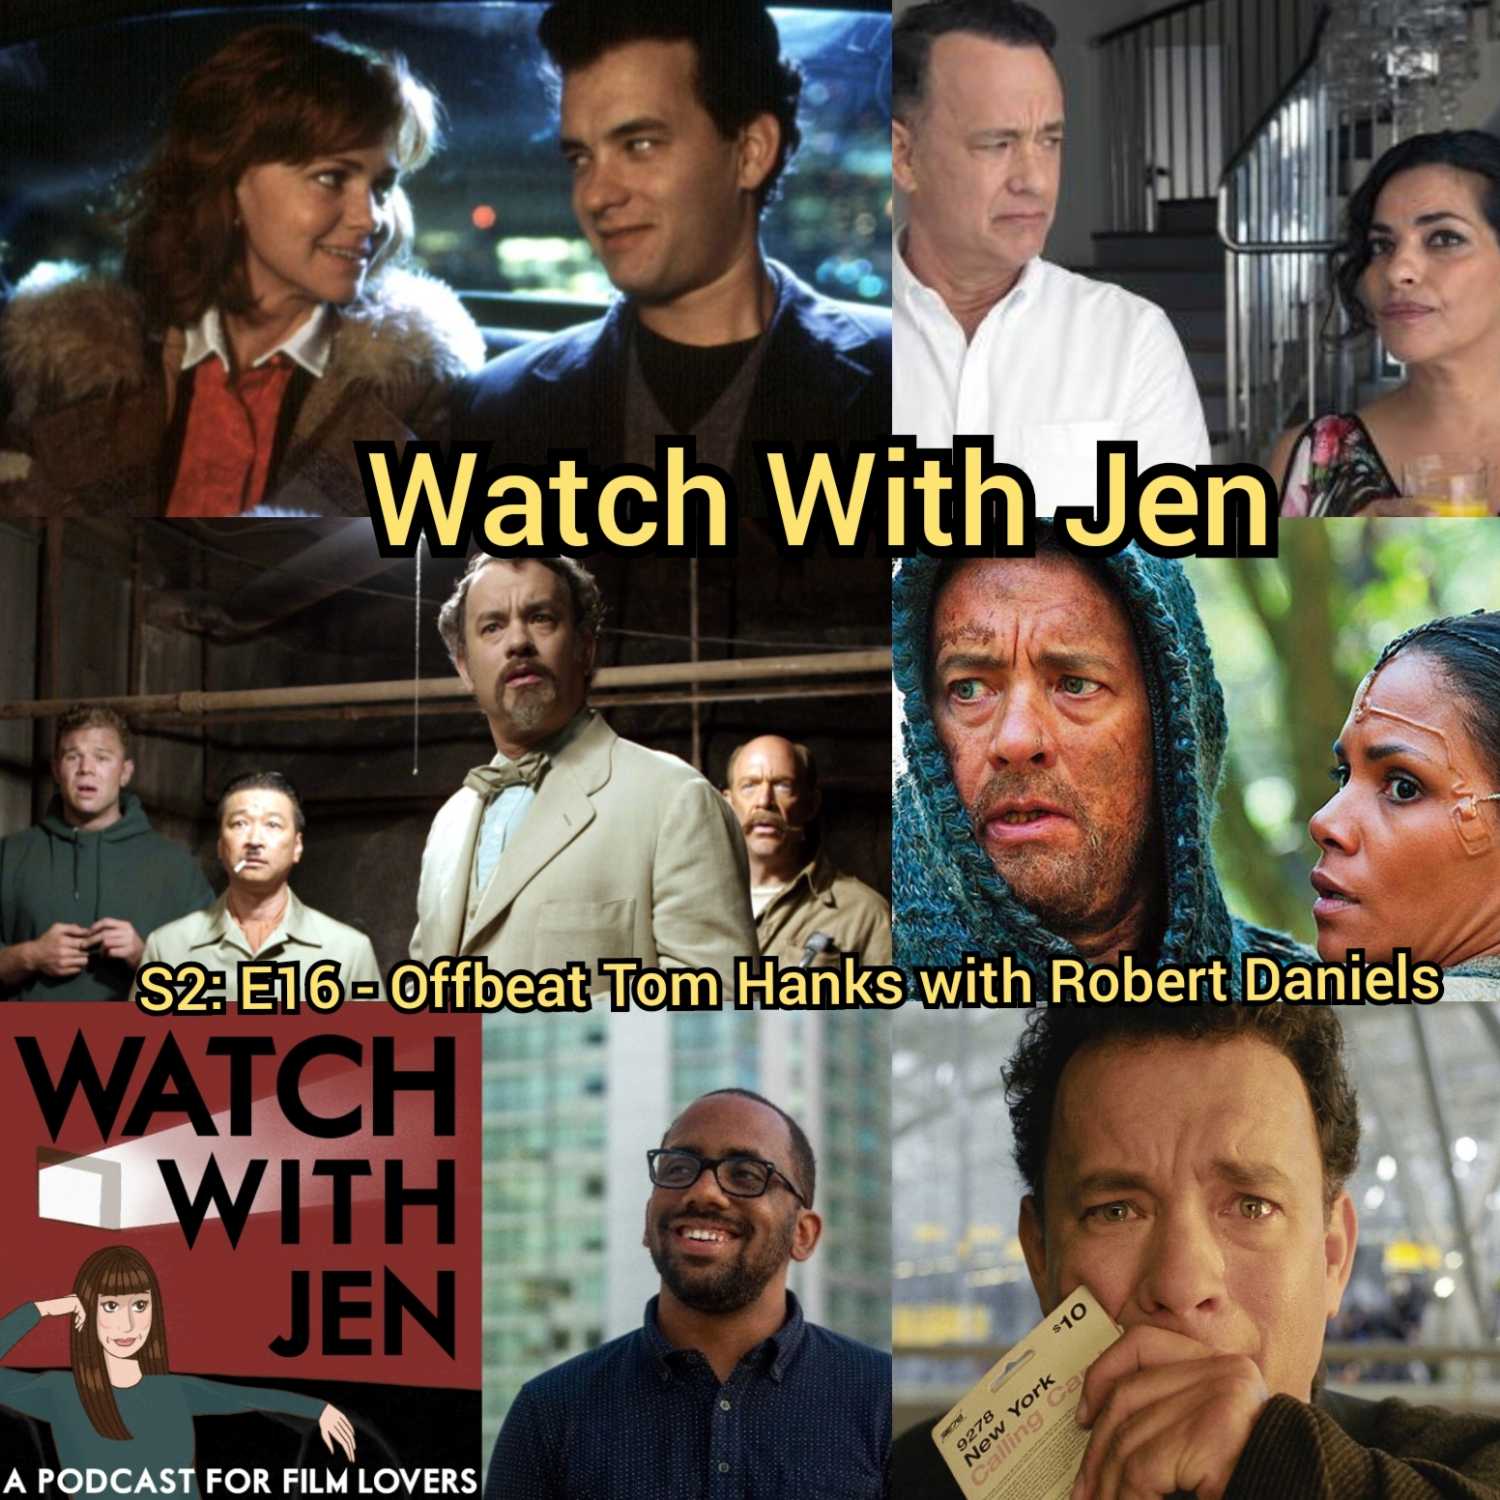 Watch With Jen - S2: E16 - Offbeat Tom Hanks with Robert Daniels